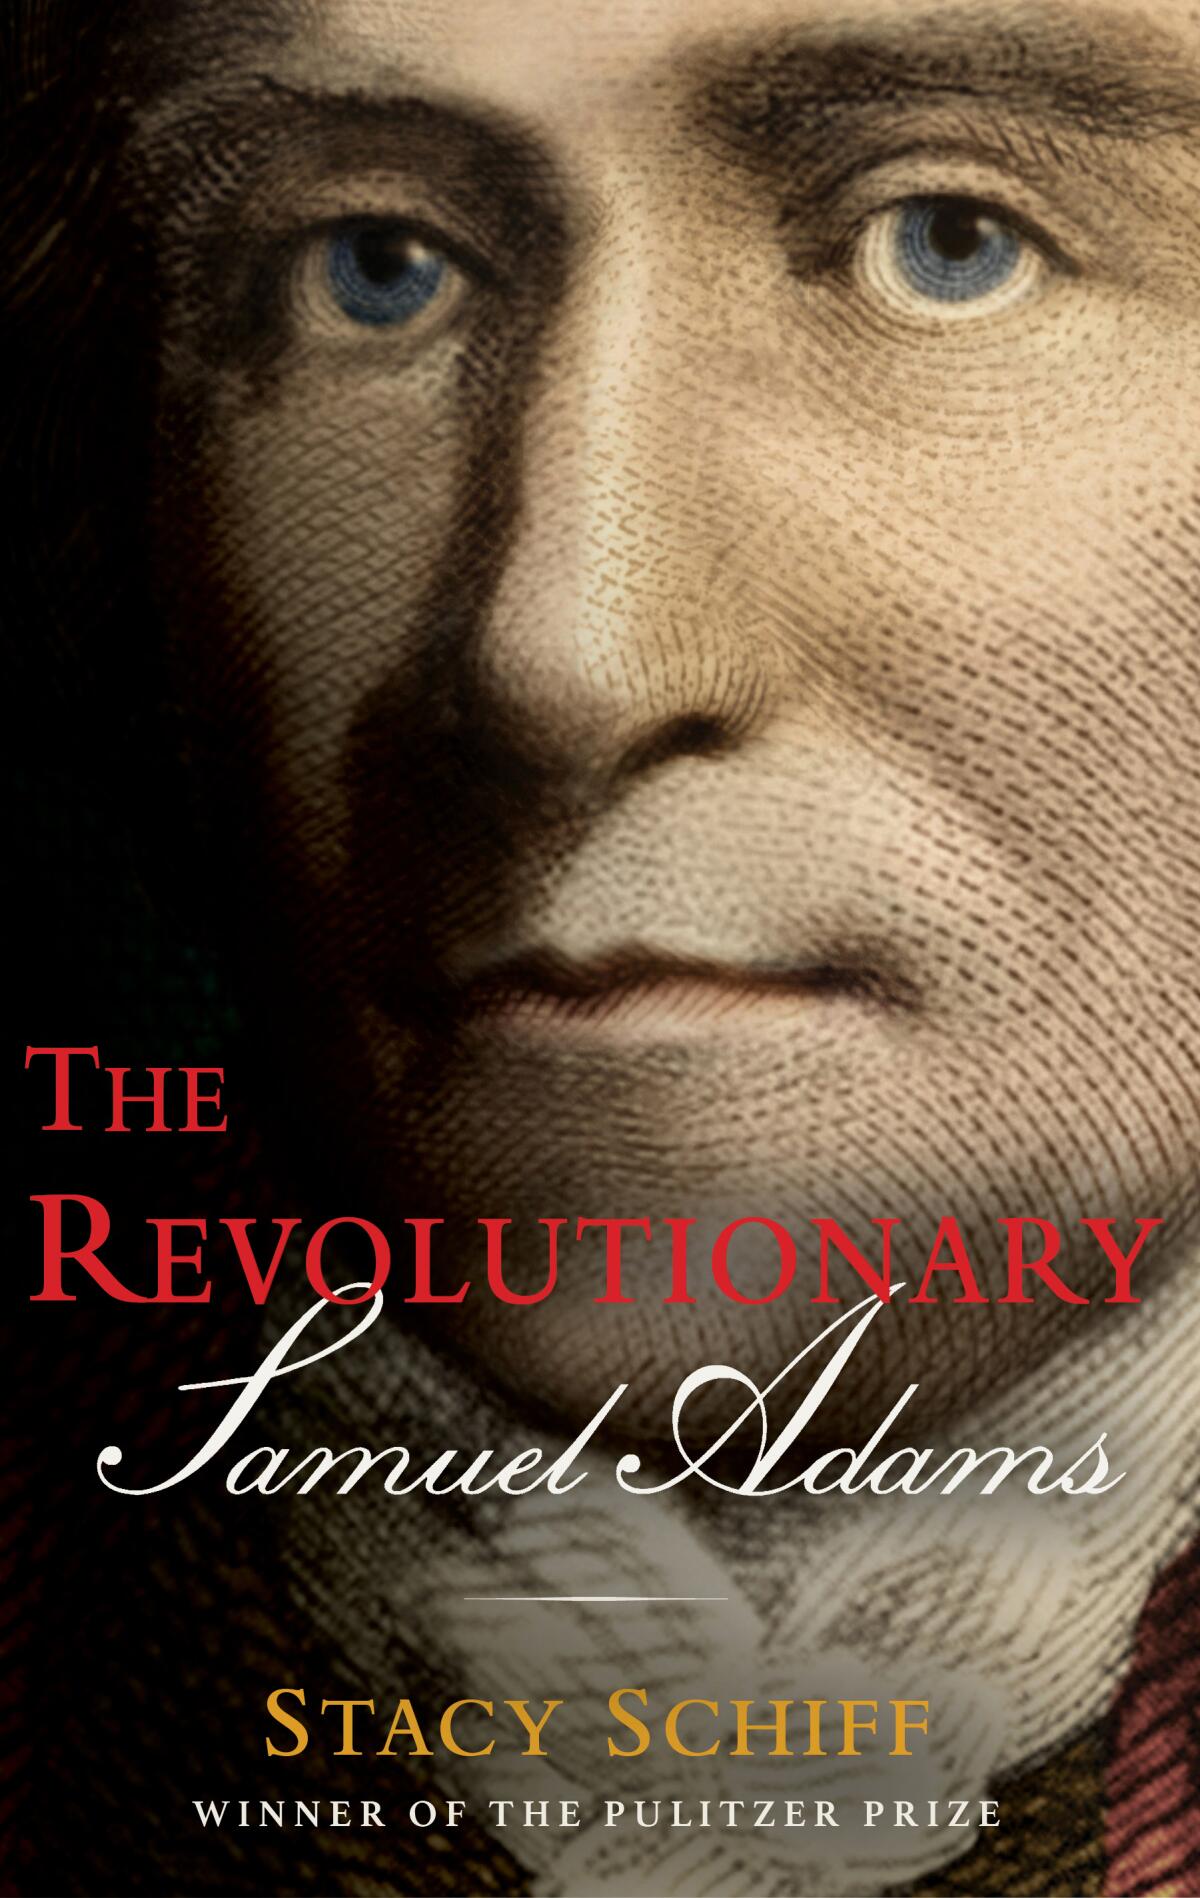 "The Revolutionary: Samuel Adams" by Stacy Schiff